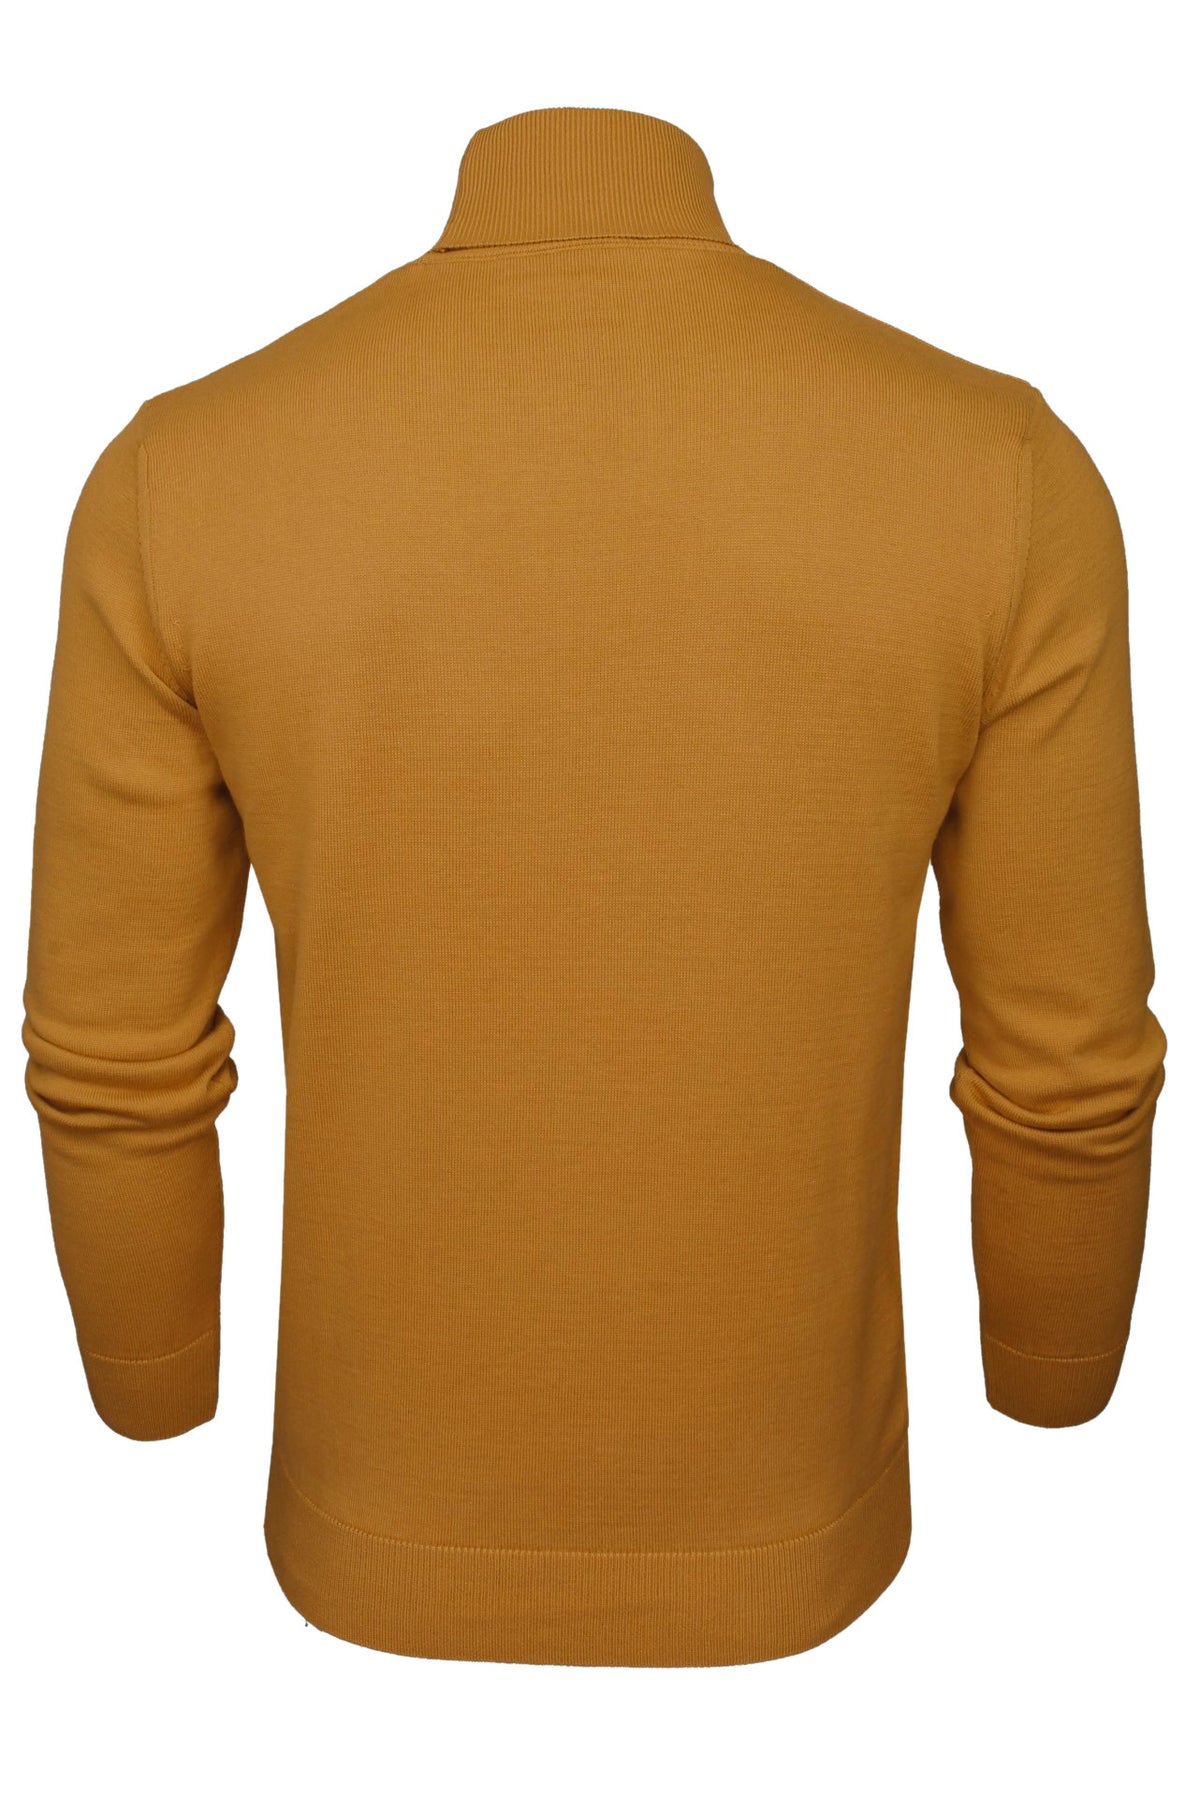 Xact Mens Roll Neck Jumper - 100% Cotton - Long Sleeved, 03, XK1004, Mustard